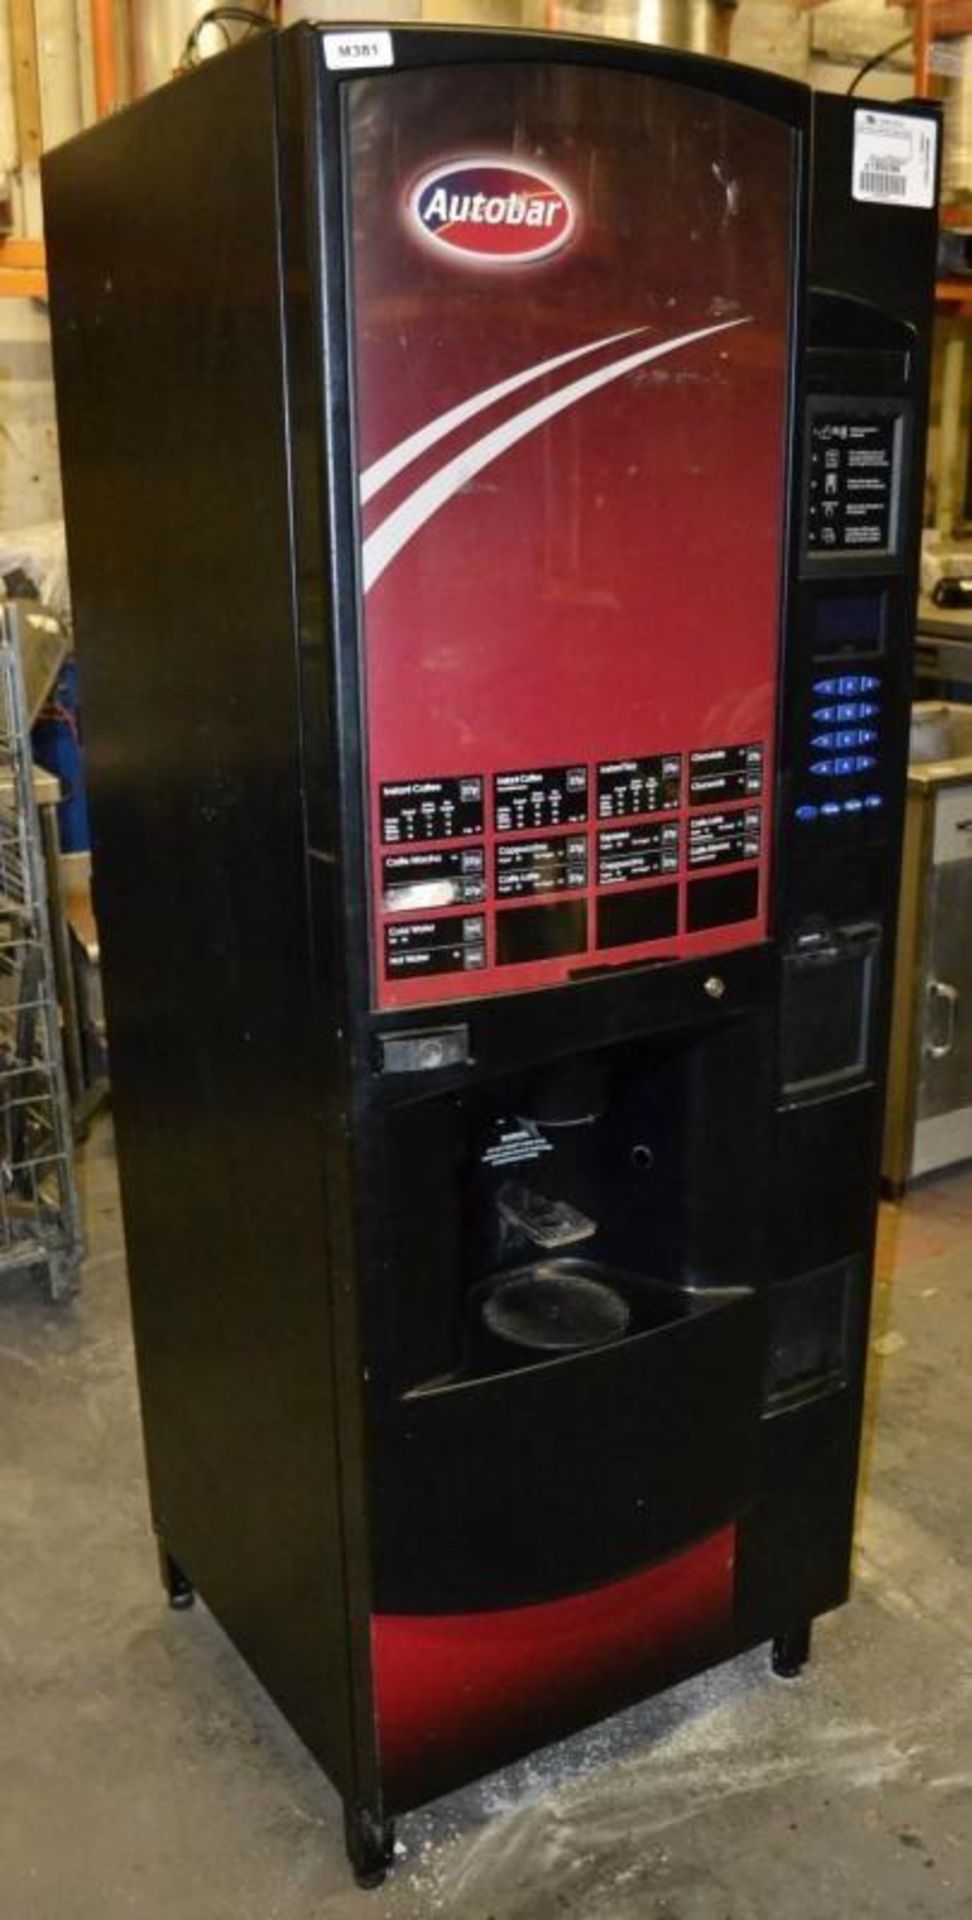 1 x Crane "Evolution" Hot Beverage Drinks Vending Machine With Keys - Year: 2009 - Recently Taken Fr